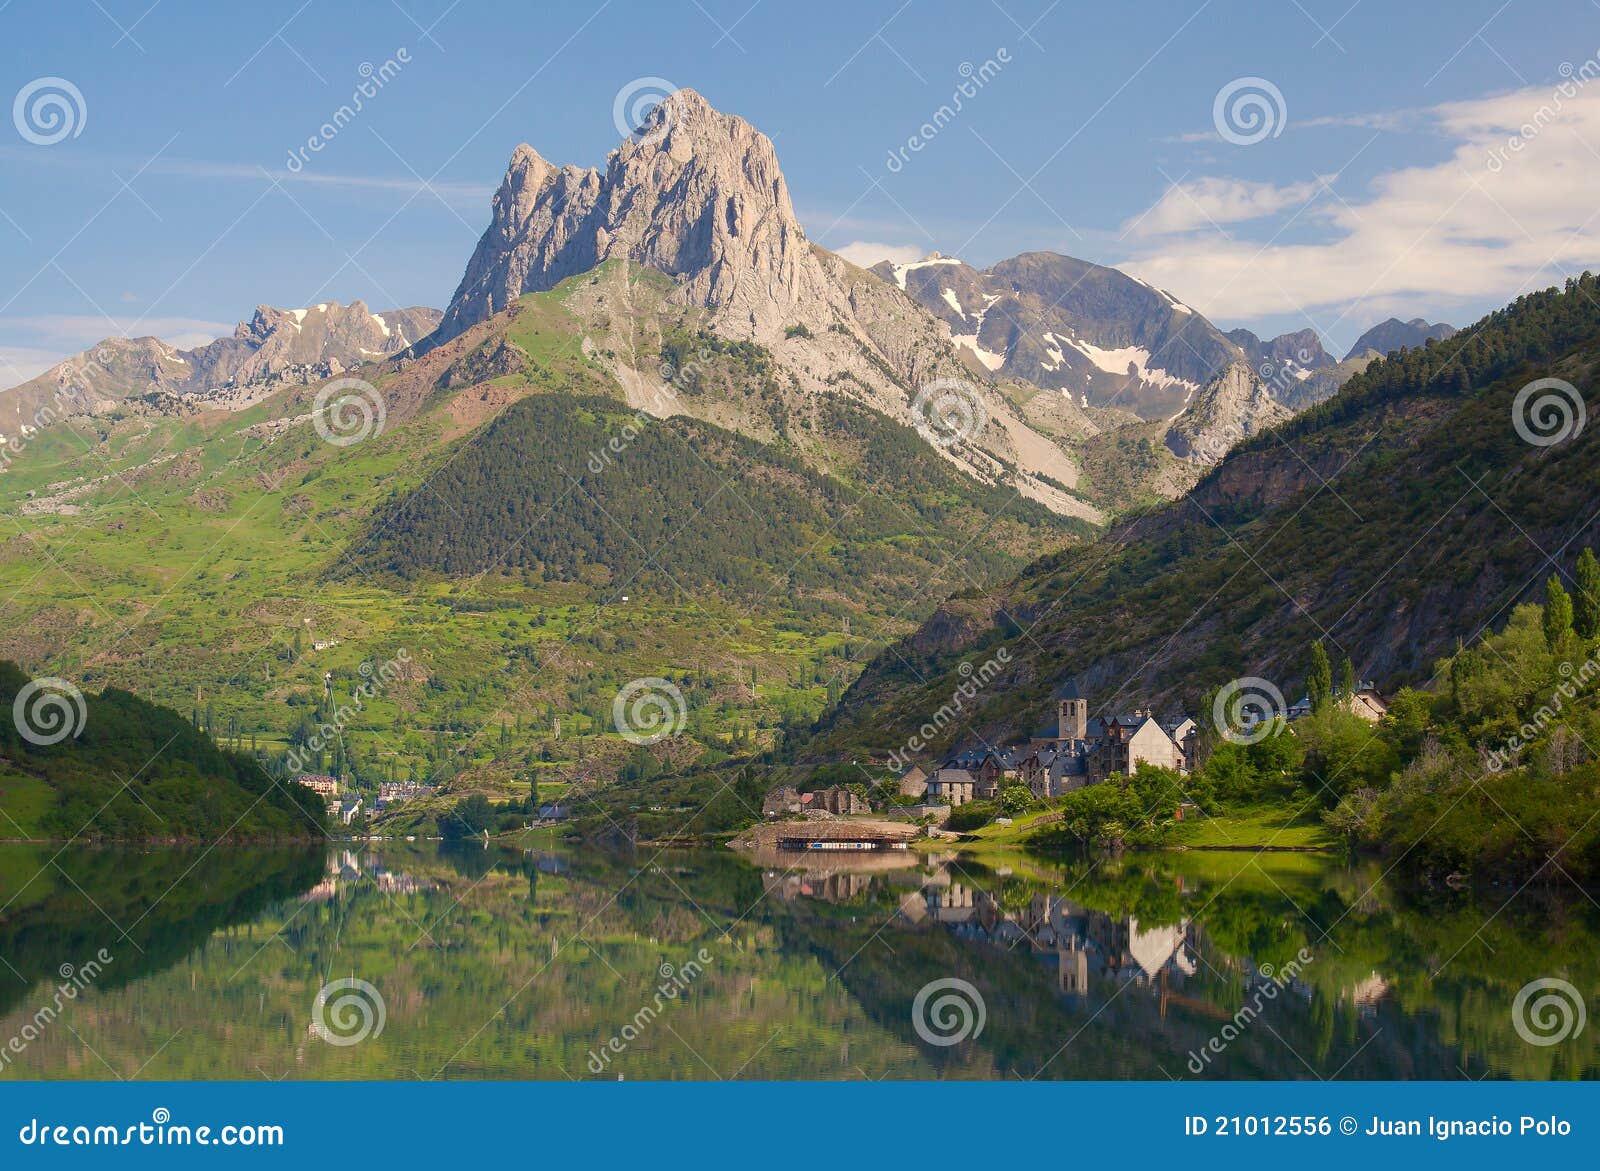 lanuza swamp, valley of tena, pyrenees.